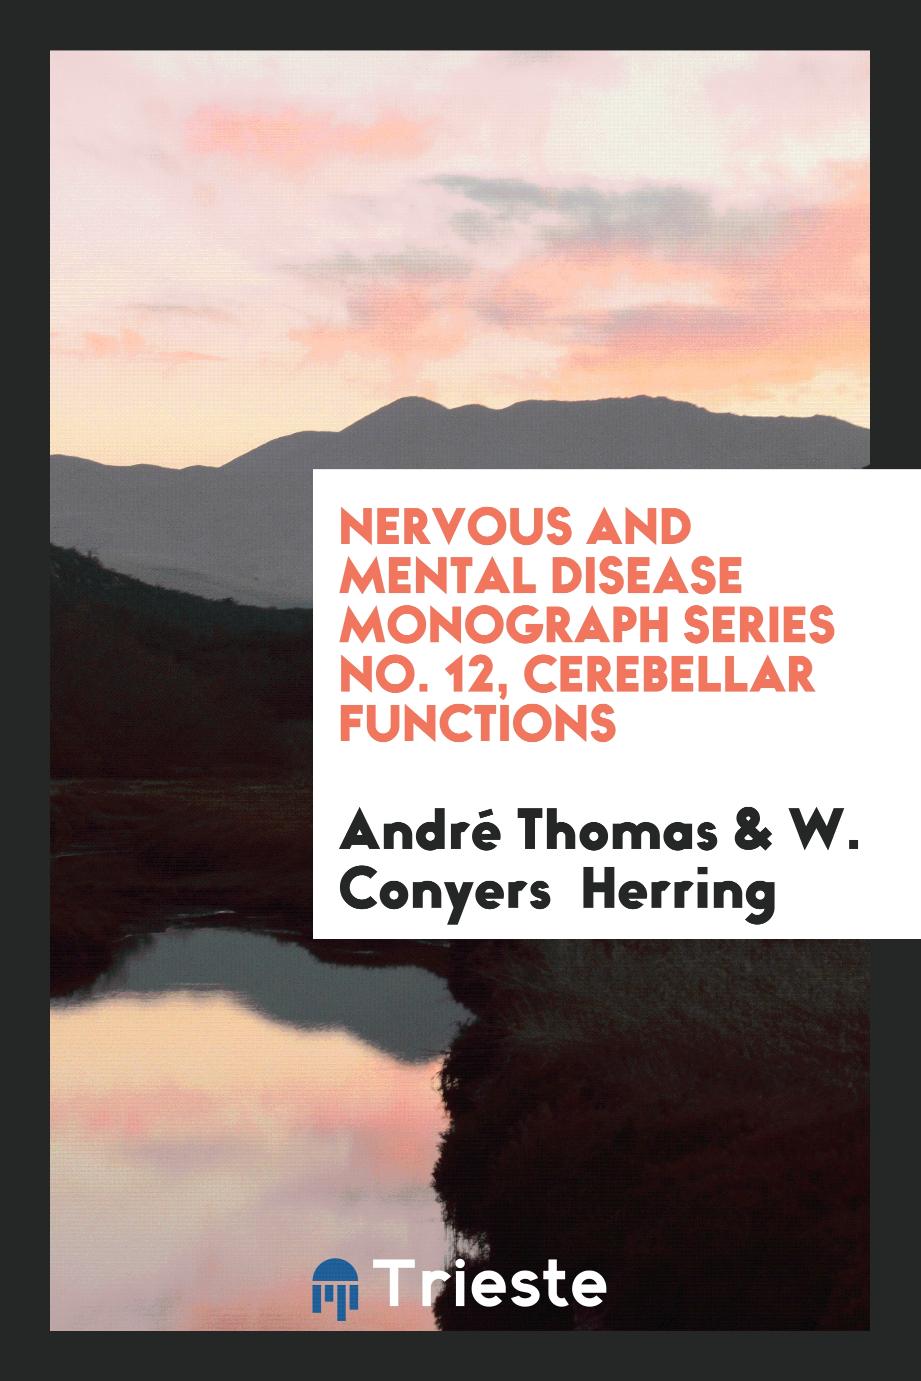 Nervous and mental disease monograph series No. 12, Cerebellar functions